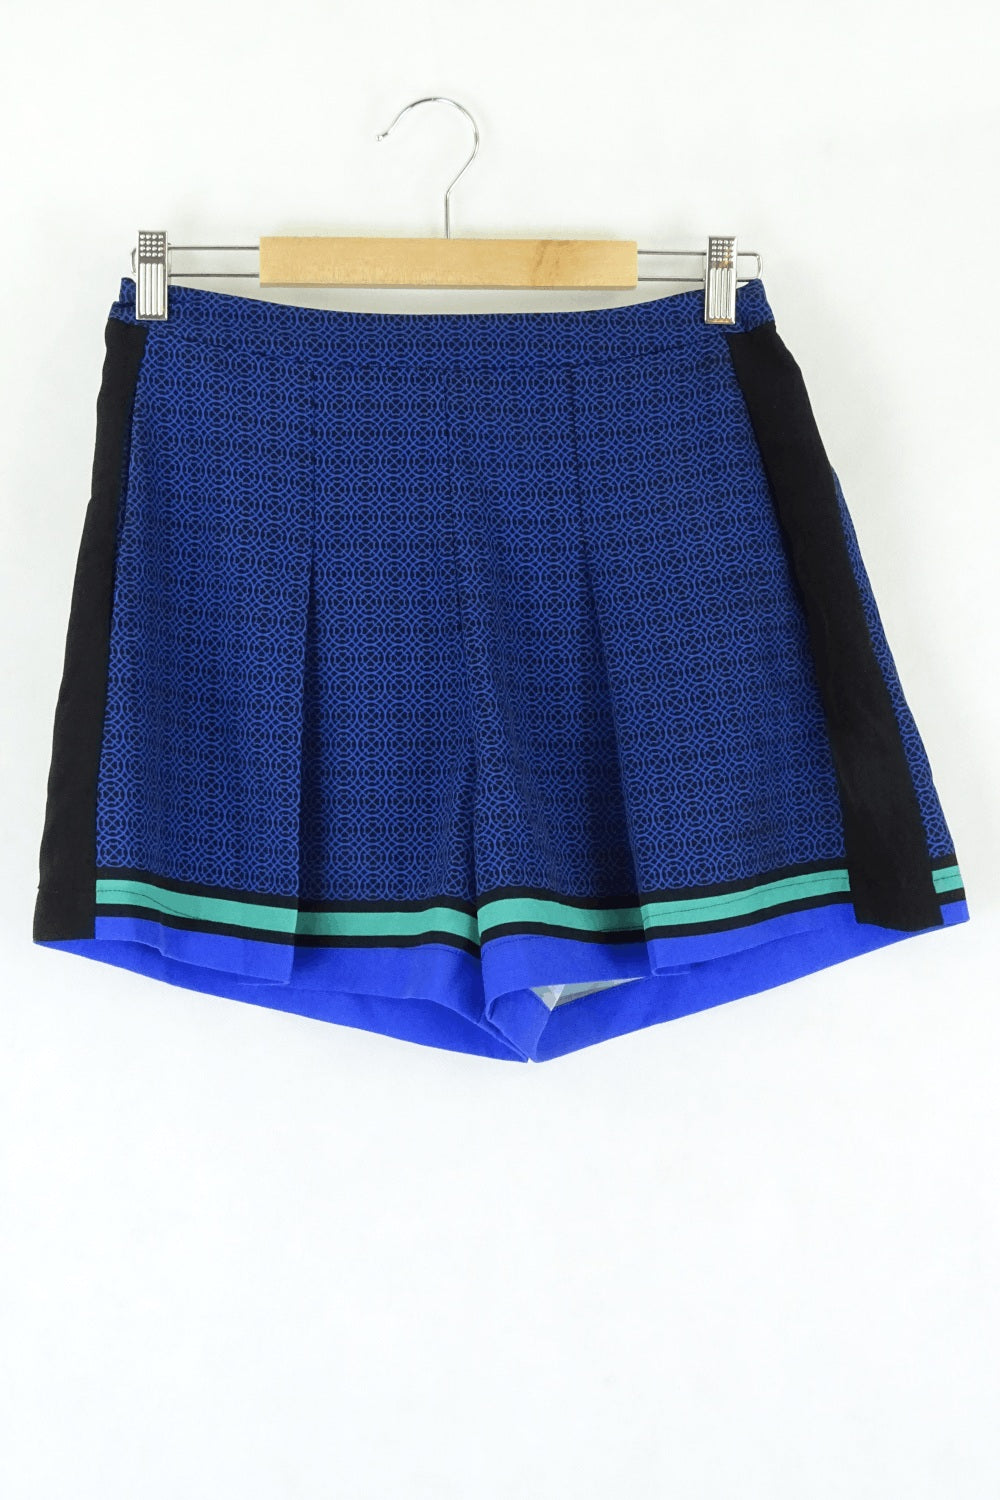 Piper Blue Shorts 10